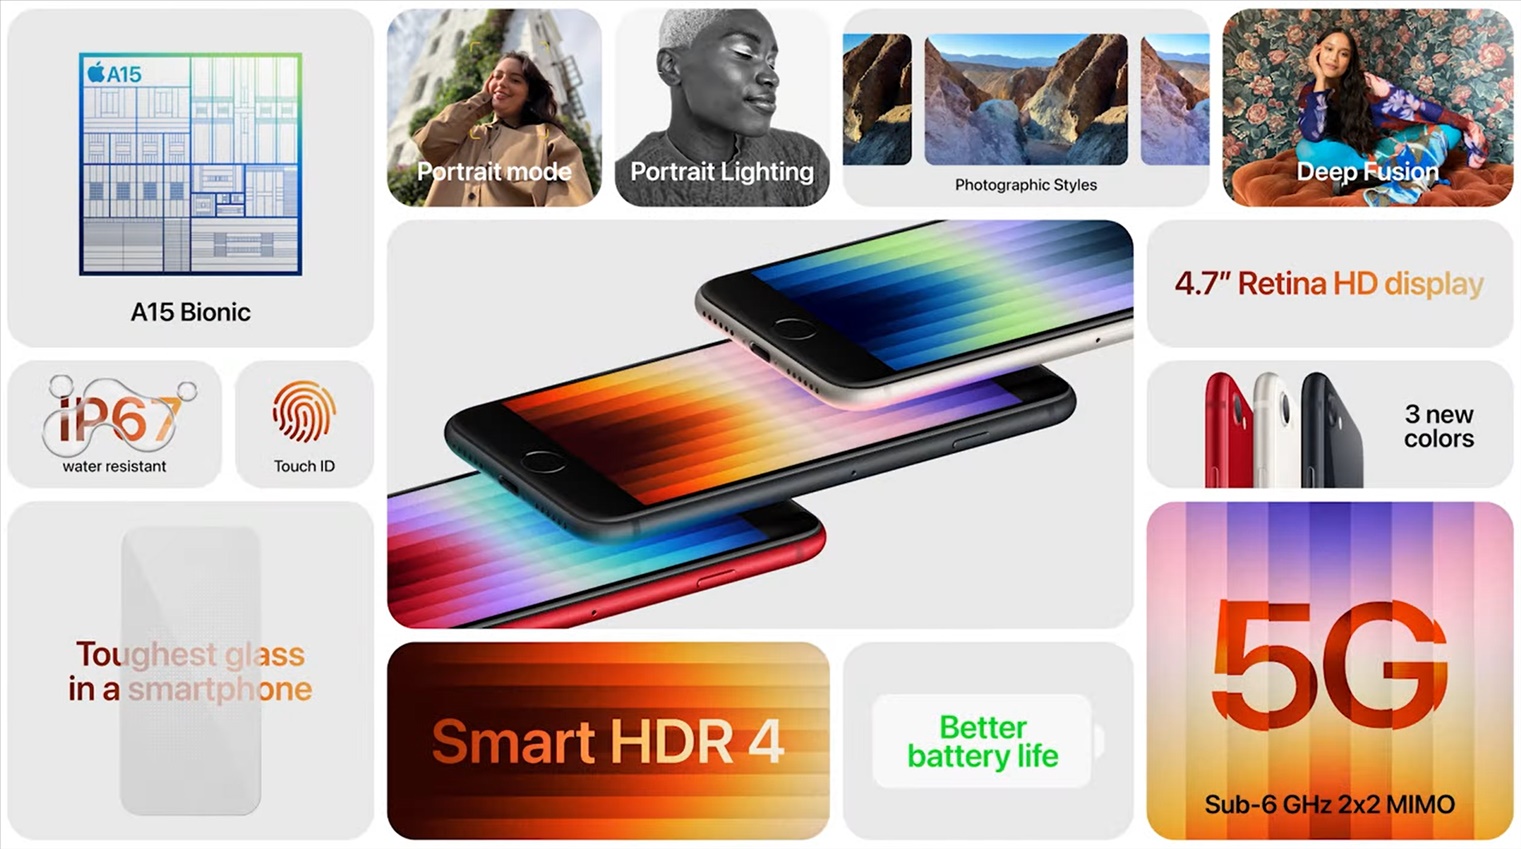 Apple представила новый дешевый iPhone SE 2022. Цена, характеристики